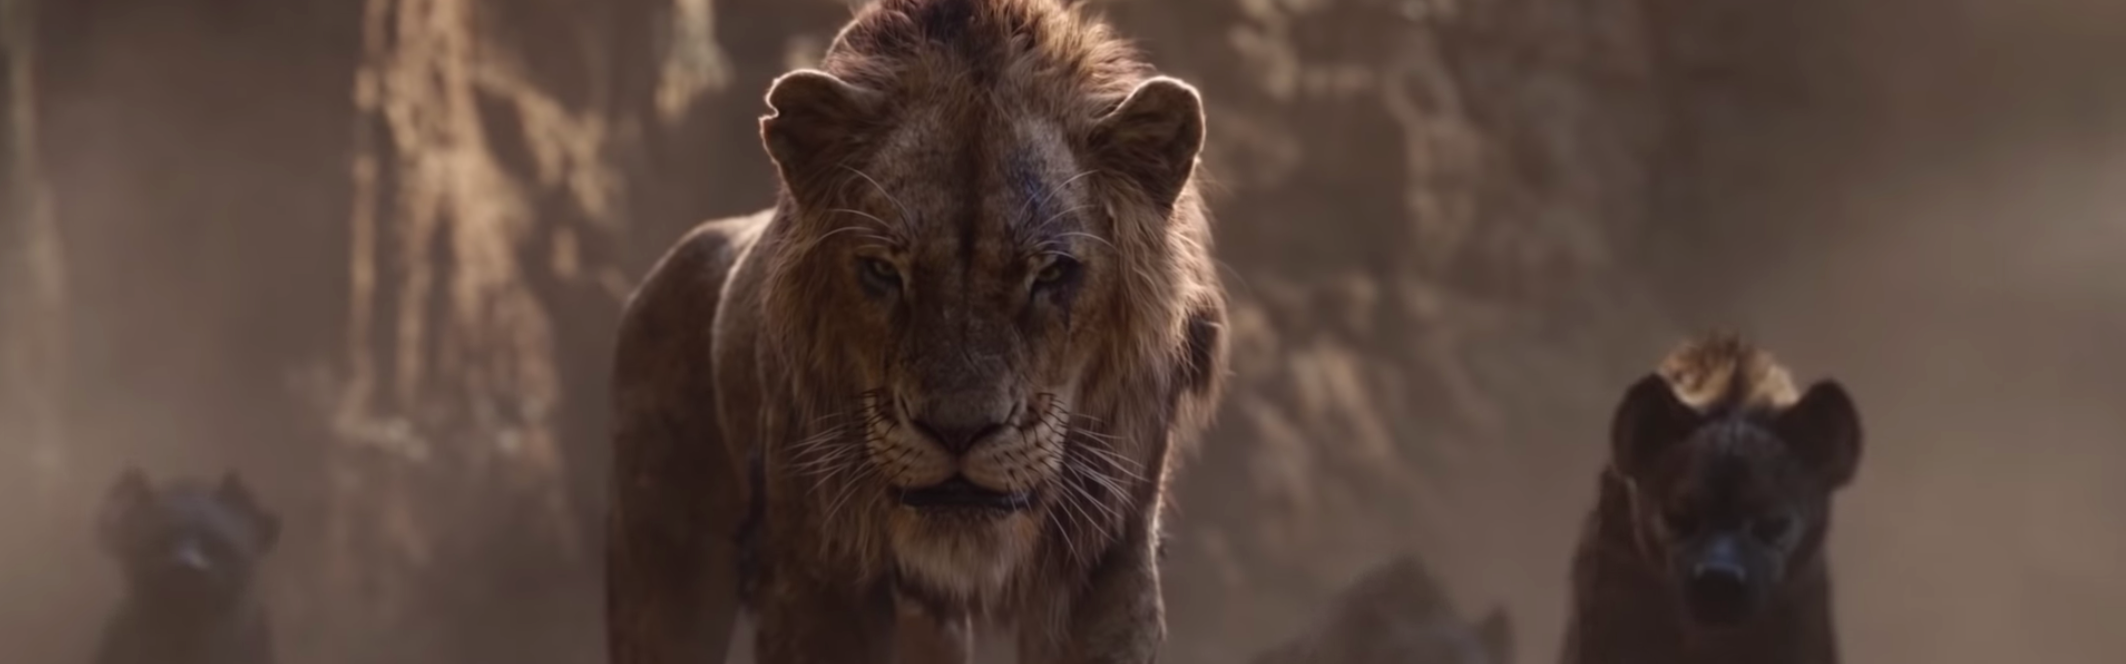 lion king wimoweh 2019